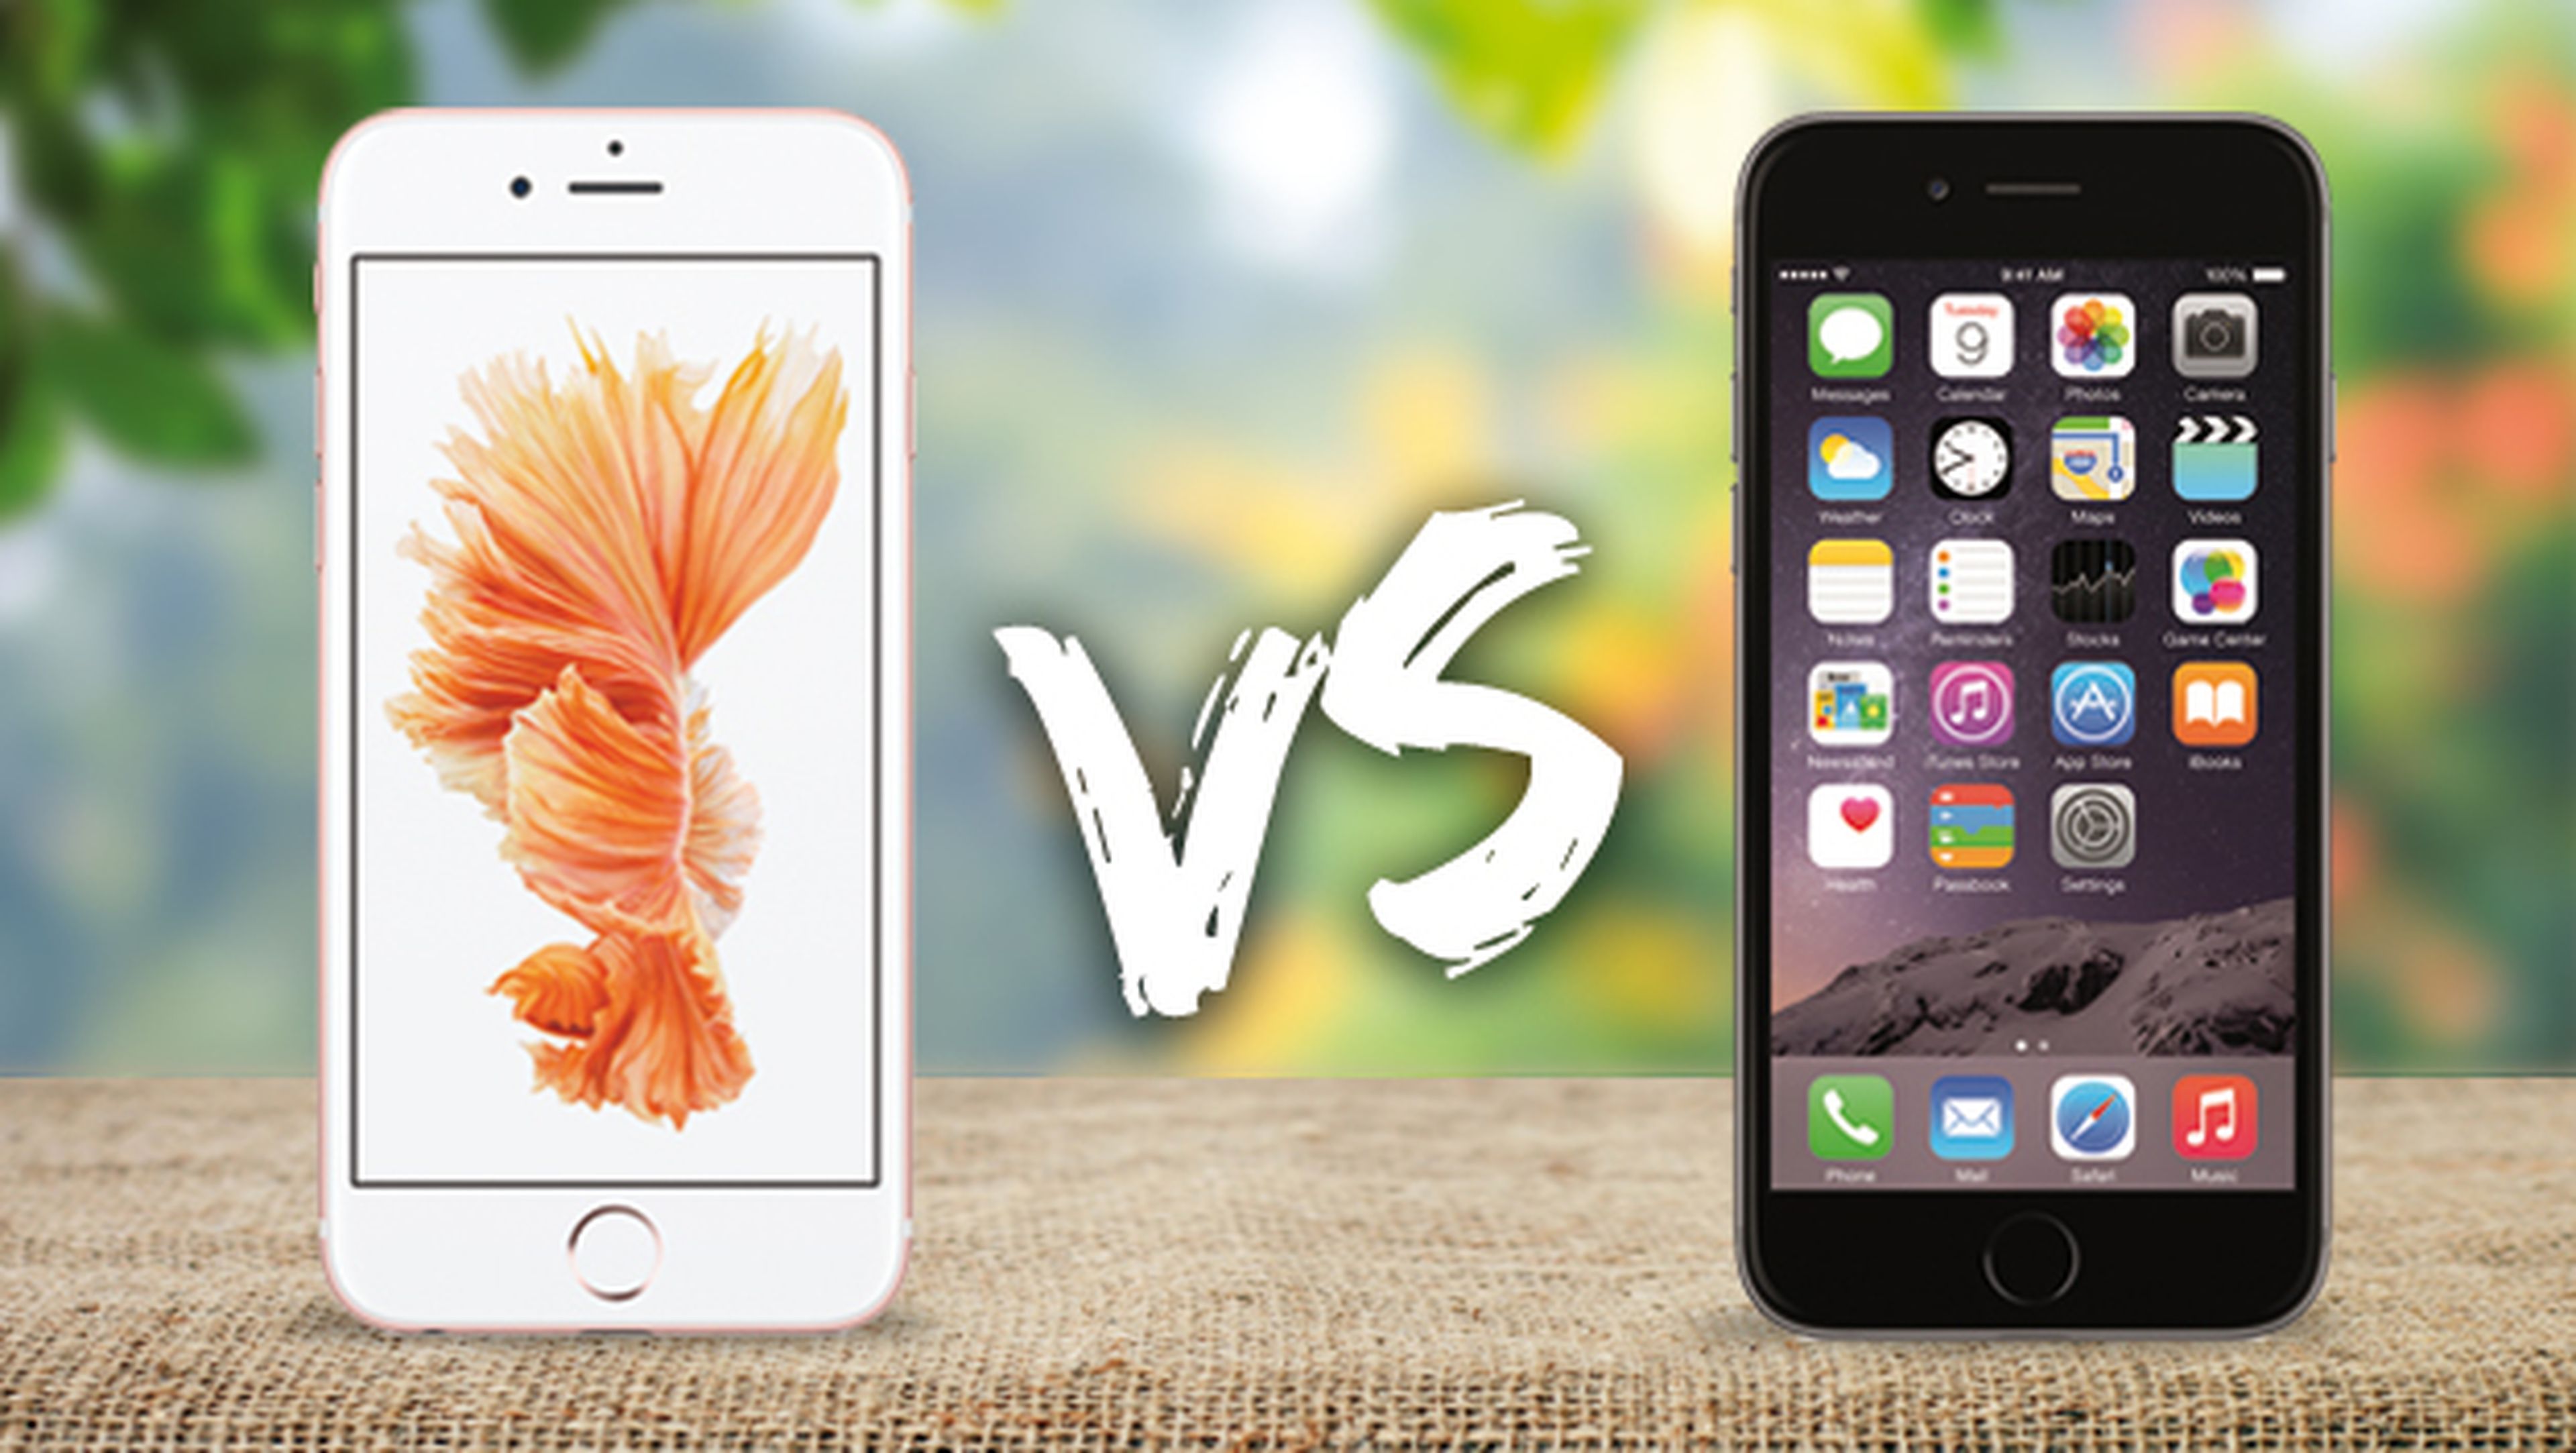 iPhone 6S vs iPhone 6